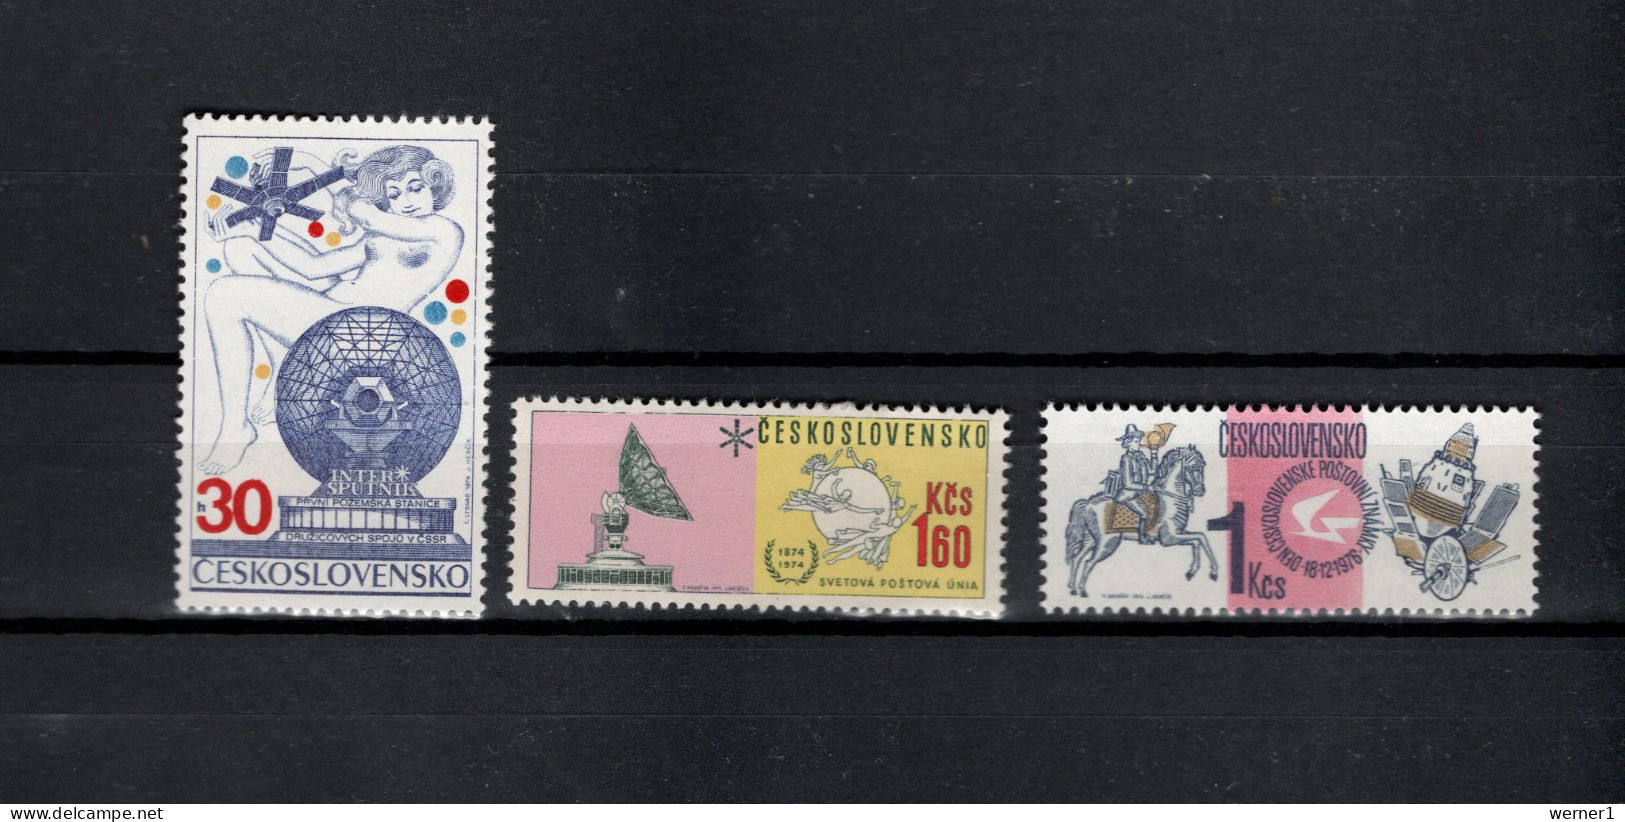 Czechoslovakia 1974/1976 Space, Intersputnik, UPU Centenary, Stamp Day 3 Stamps MNH - Europa